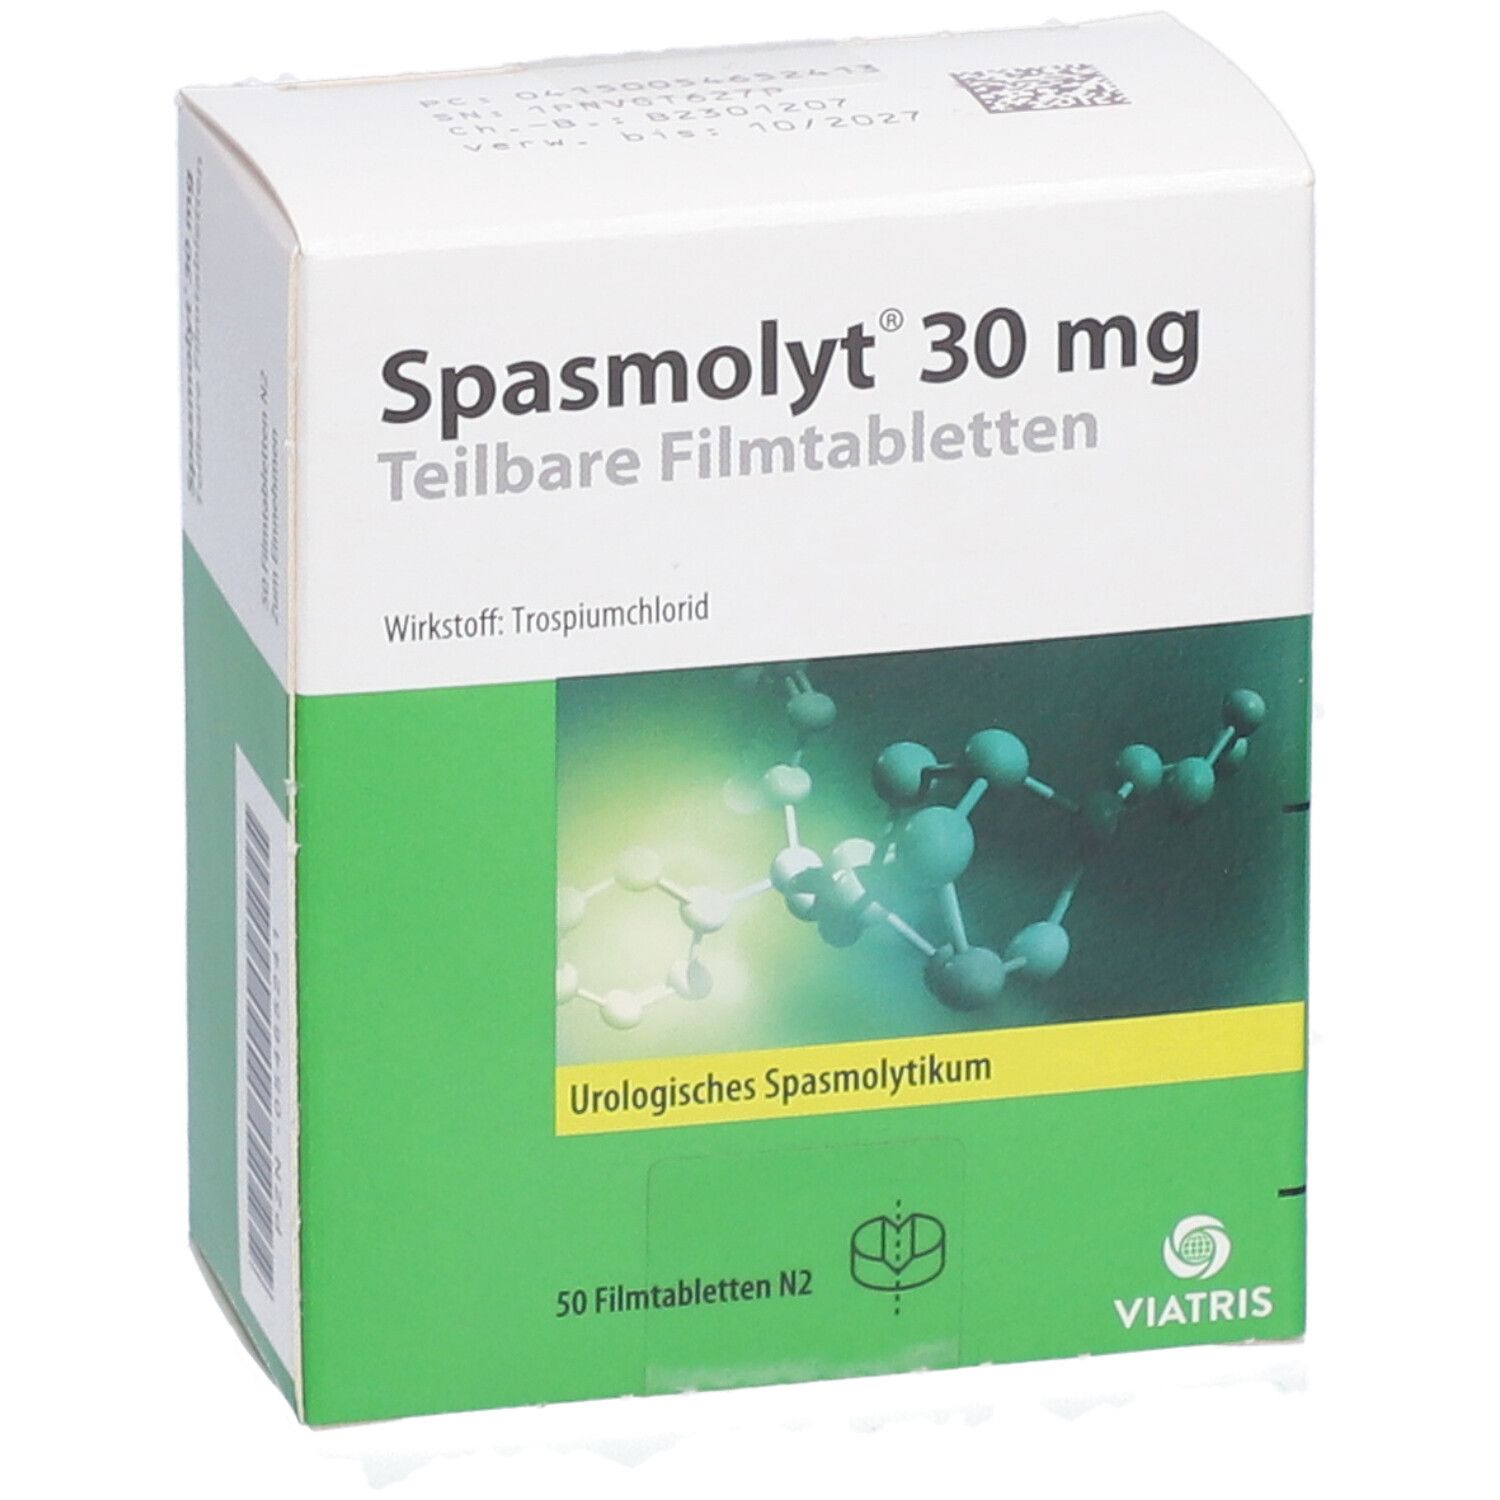 Spasmolyt® 30 mg